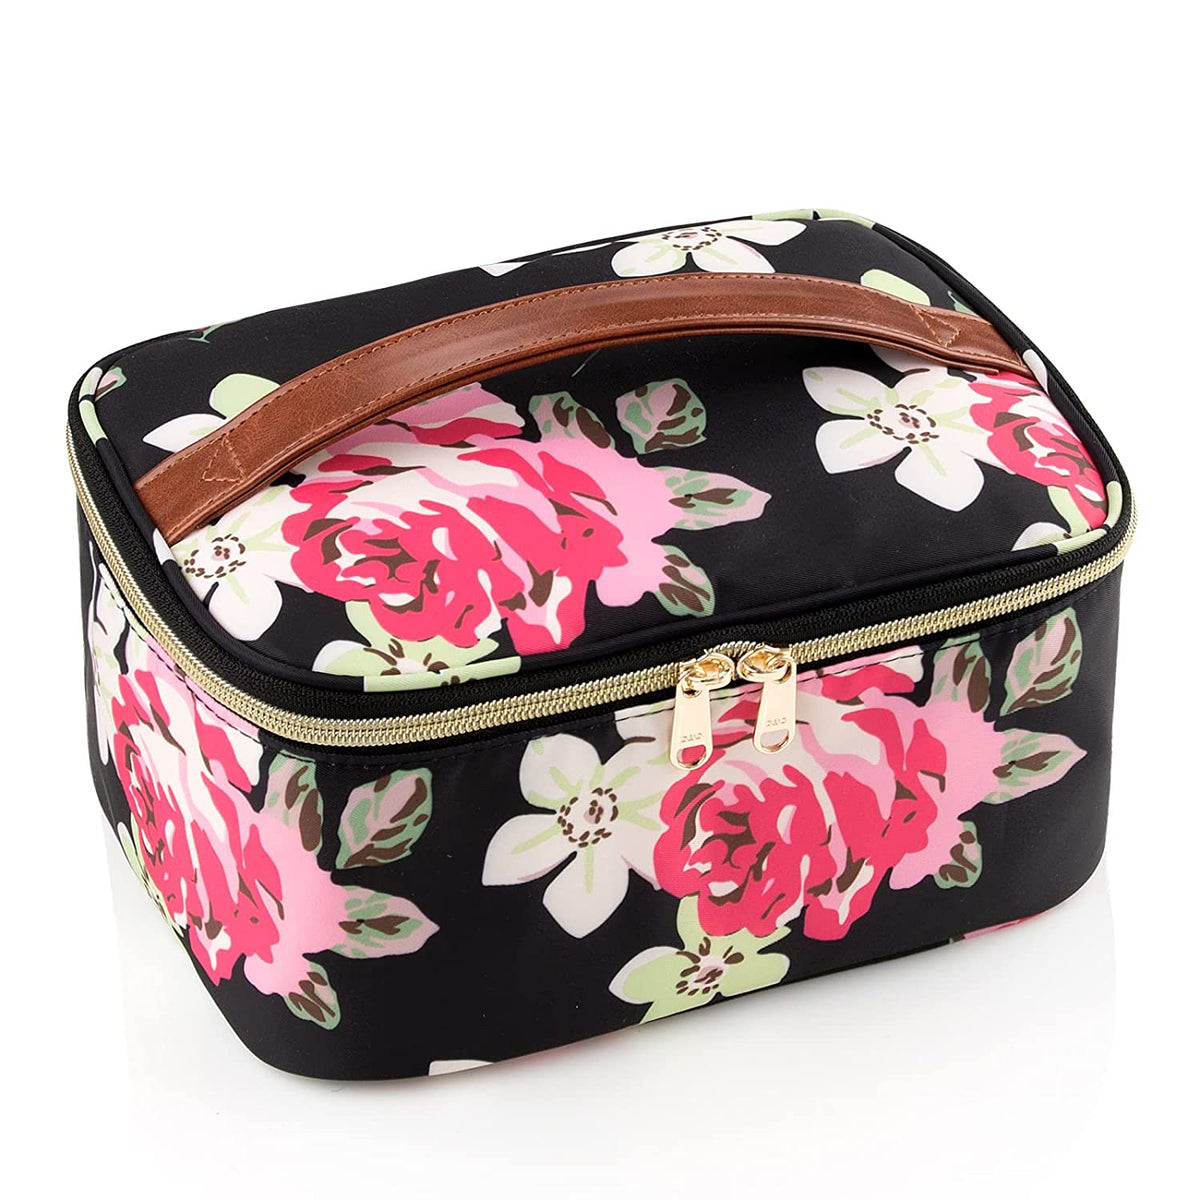 relavel Small Pink Portable Travel Makeup Bag